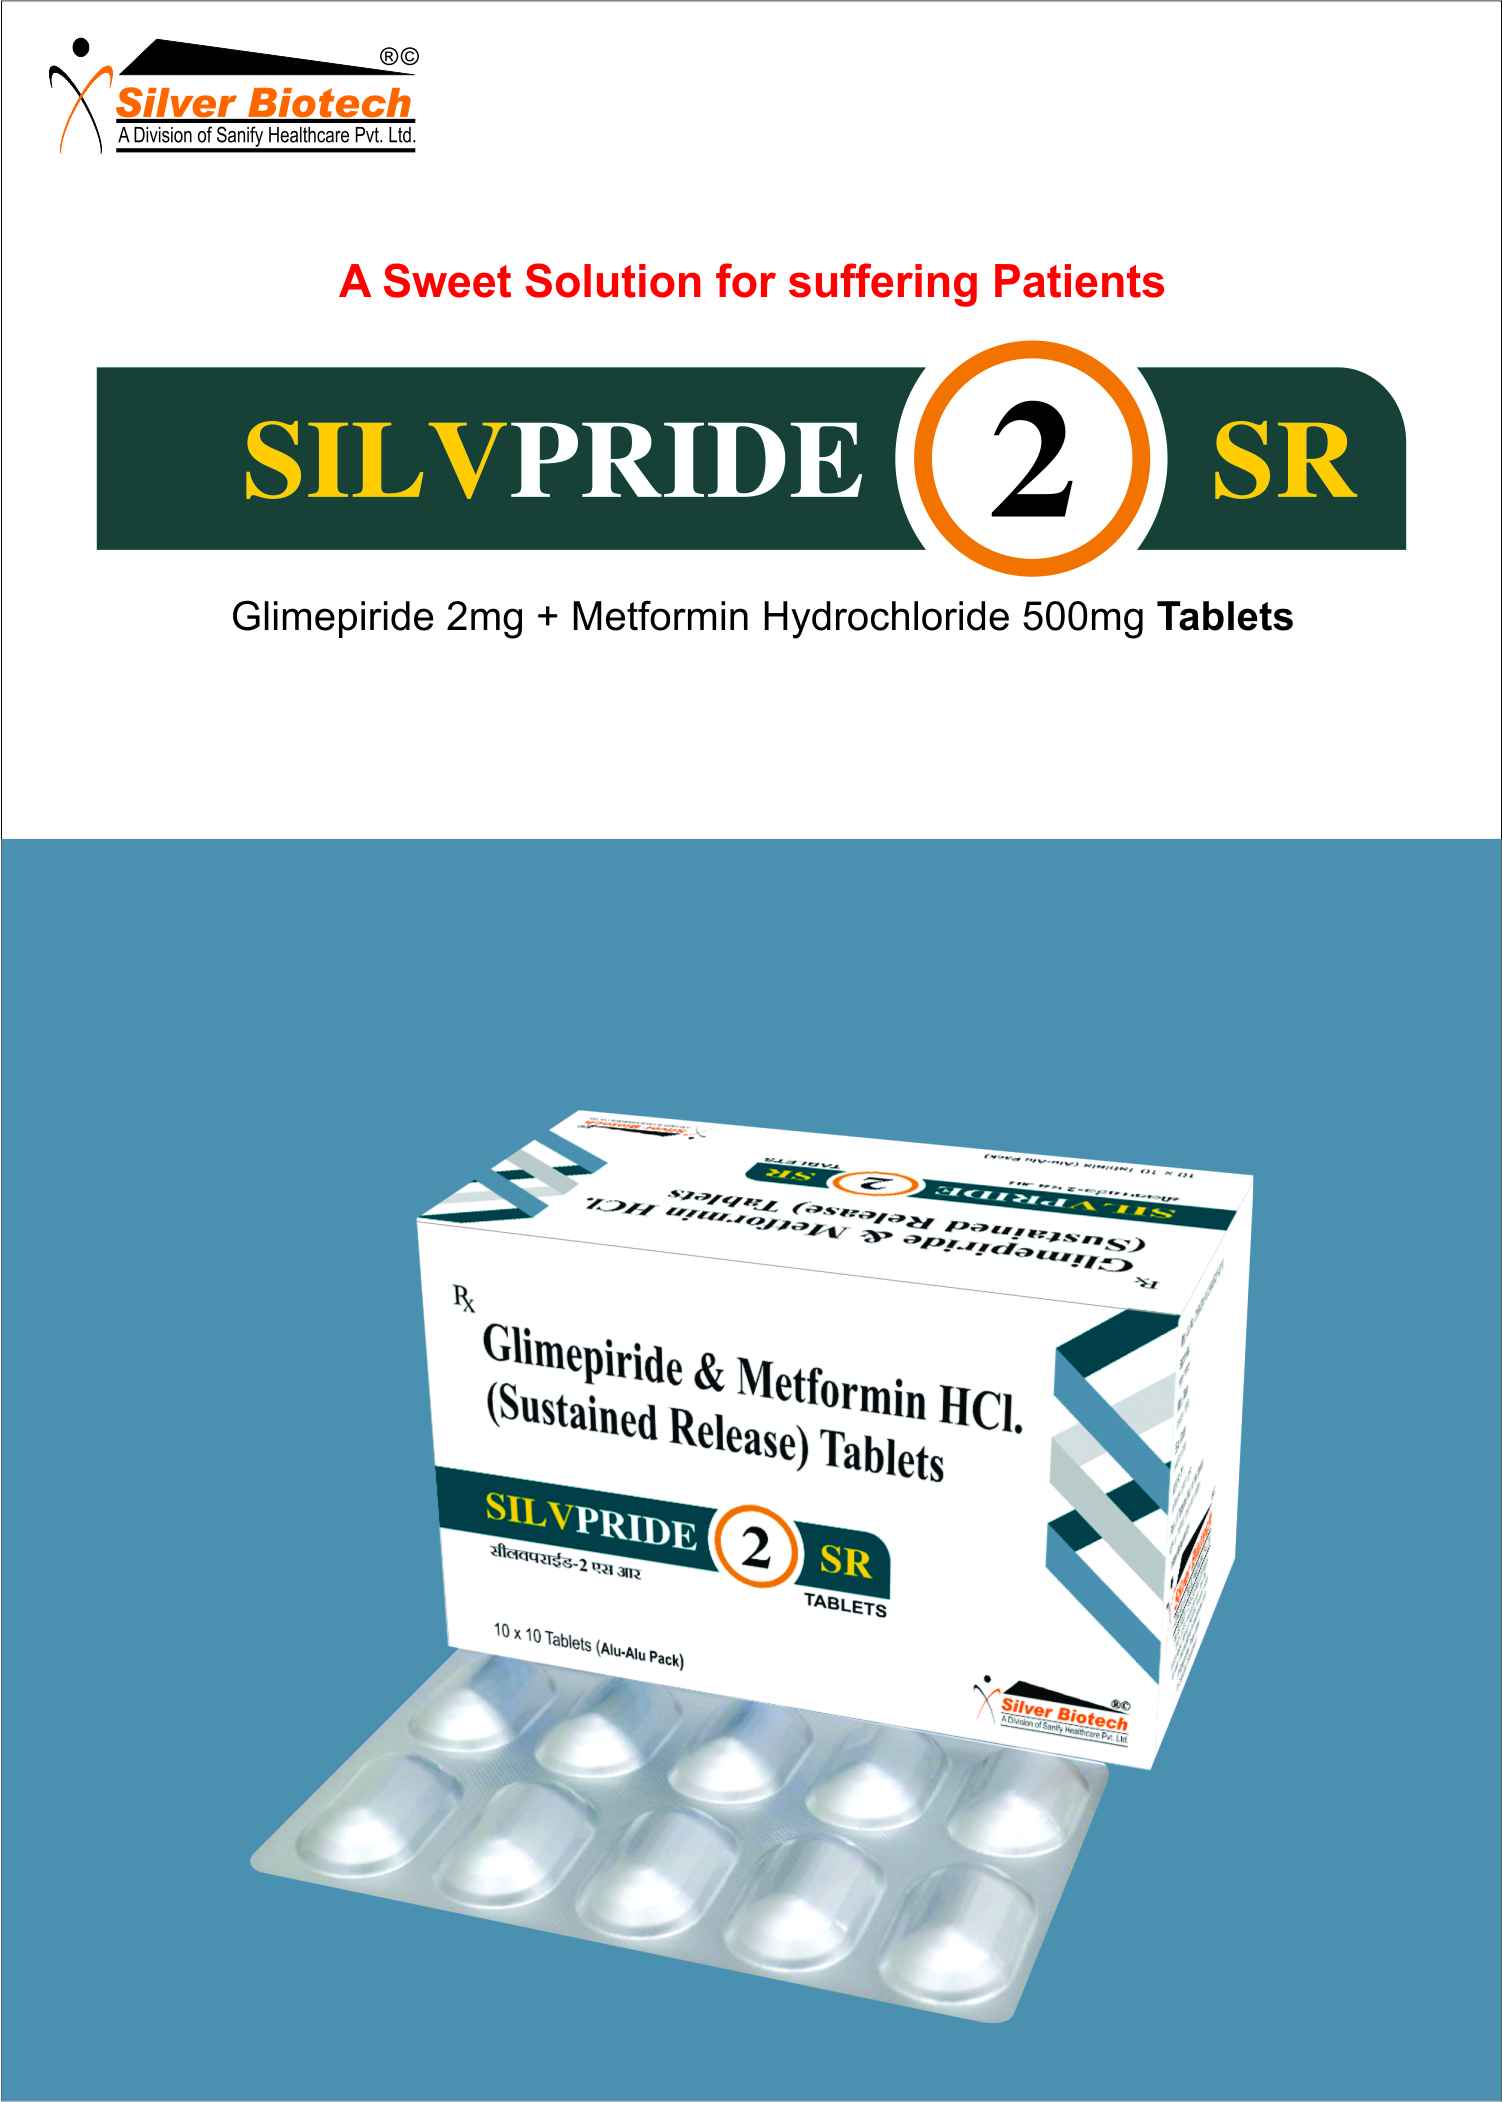 Glimepiride 2mg and Metformin Hydrochloride 500mg Tablets